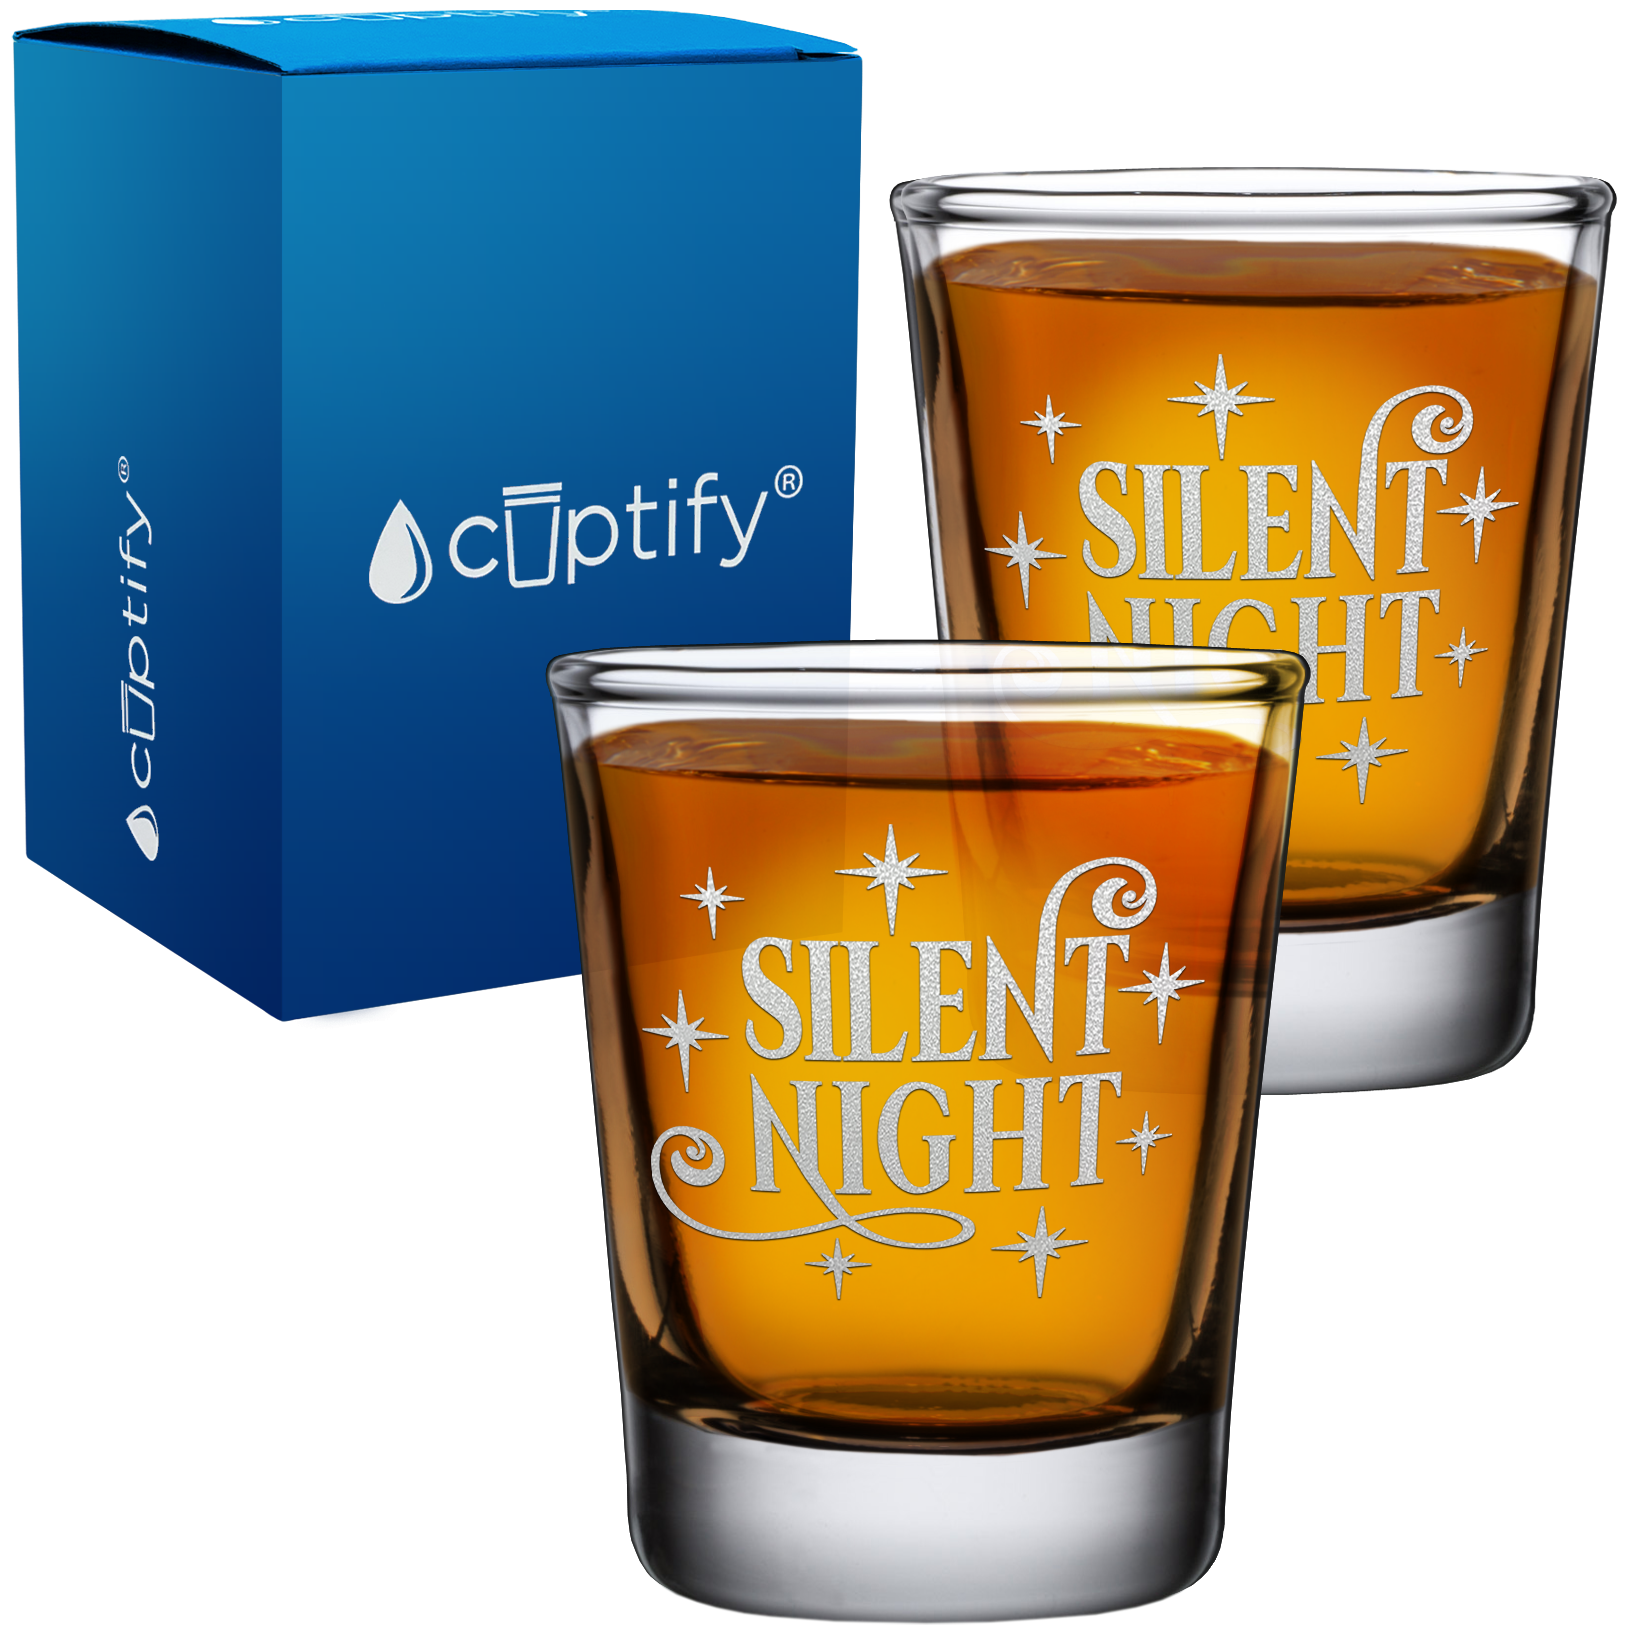 Silent Night on 2oz Shot Glasses - Set of 2